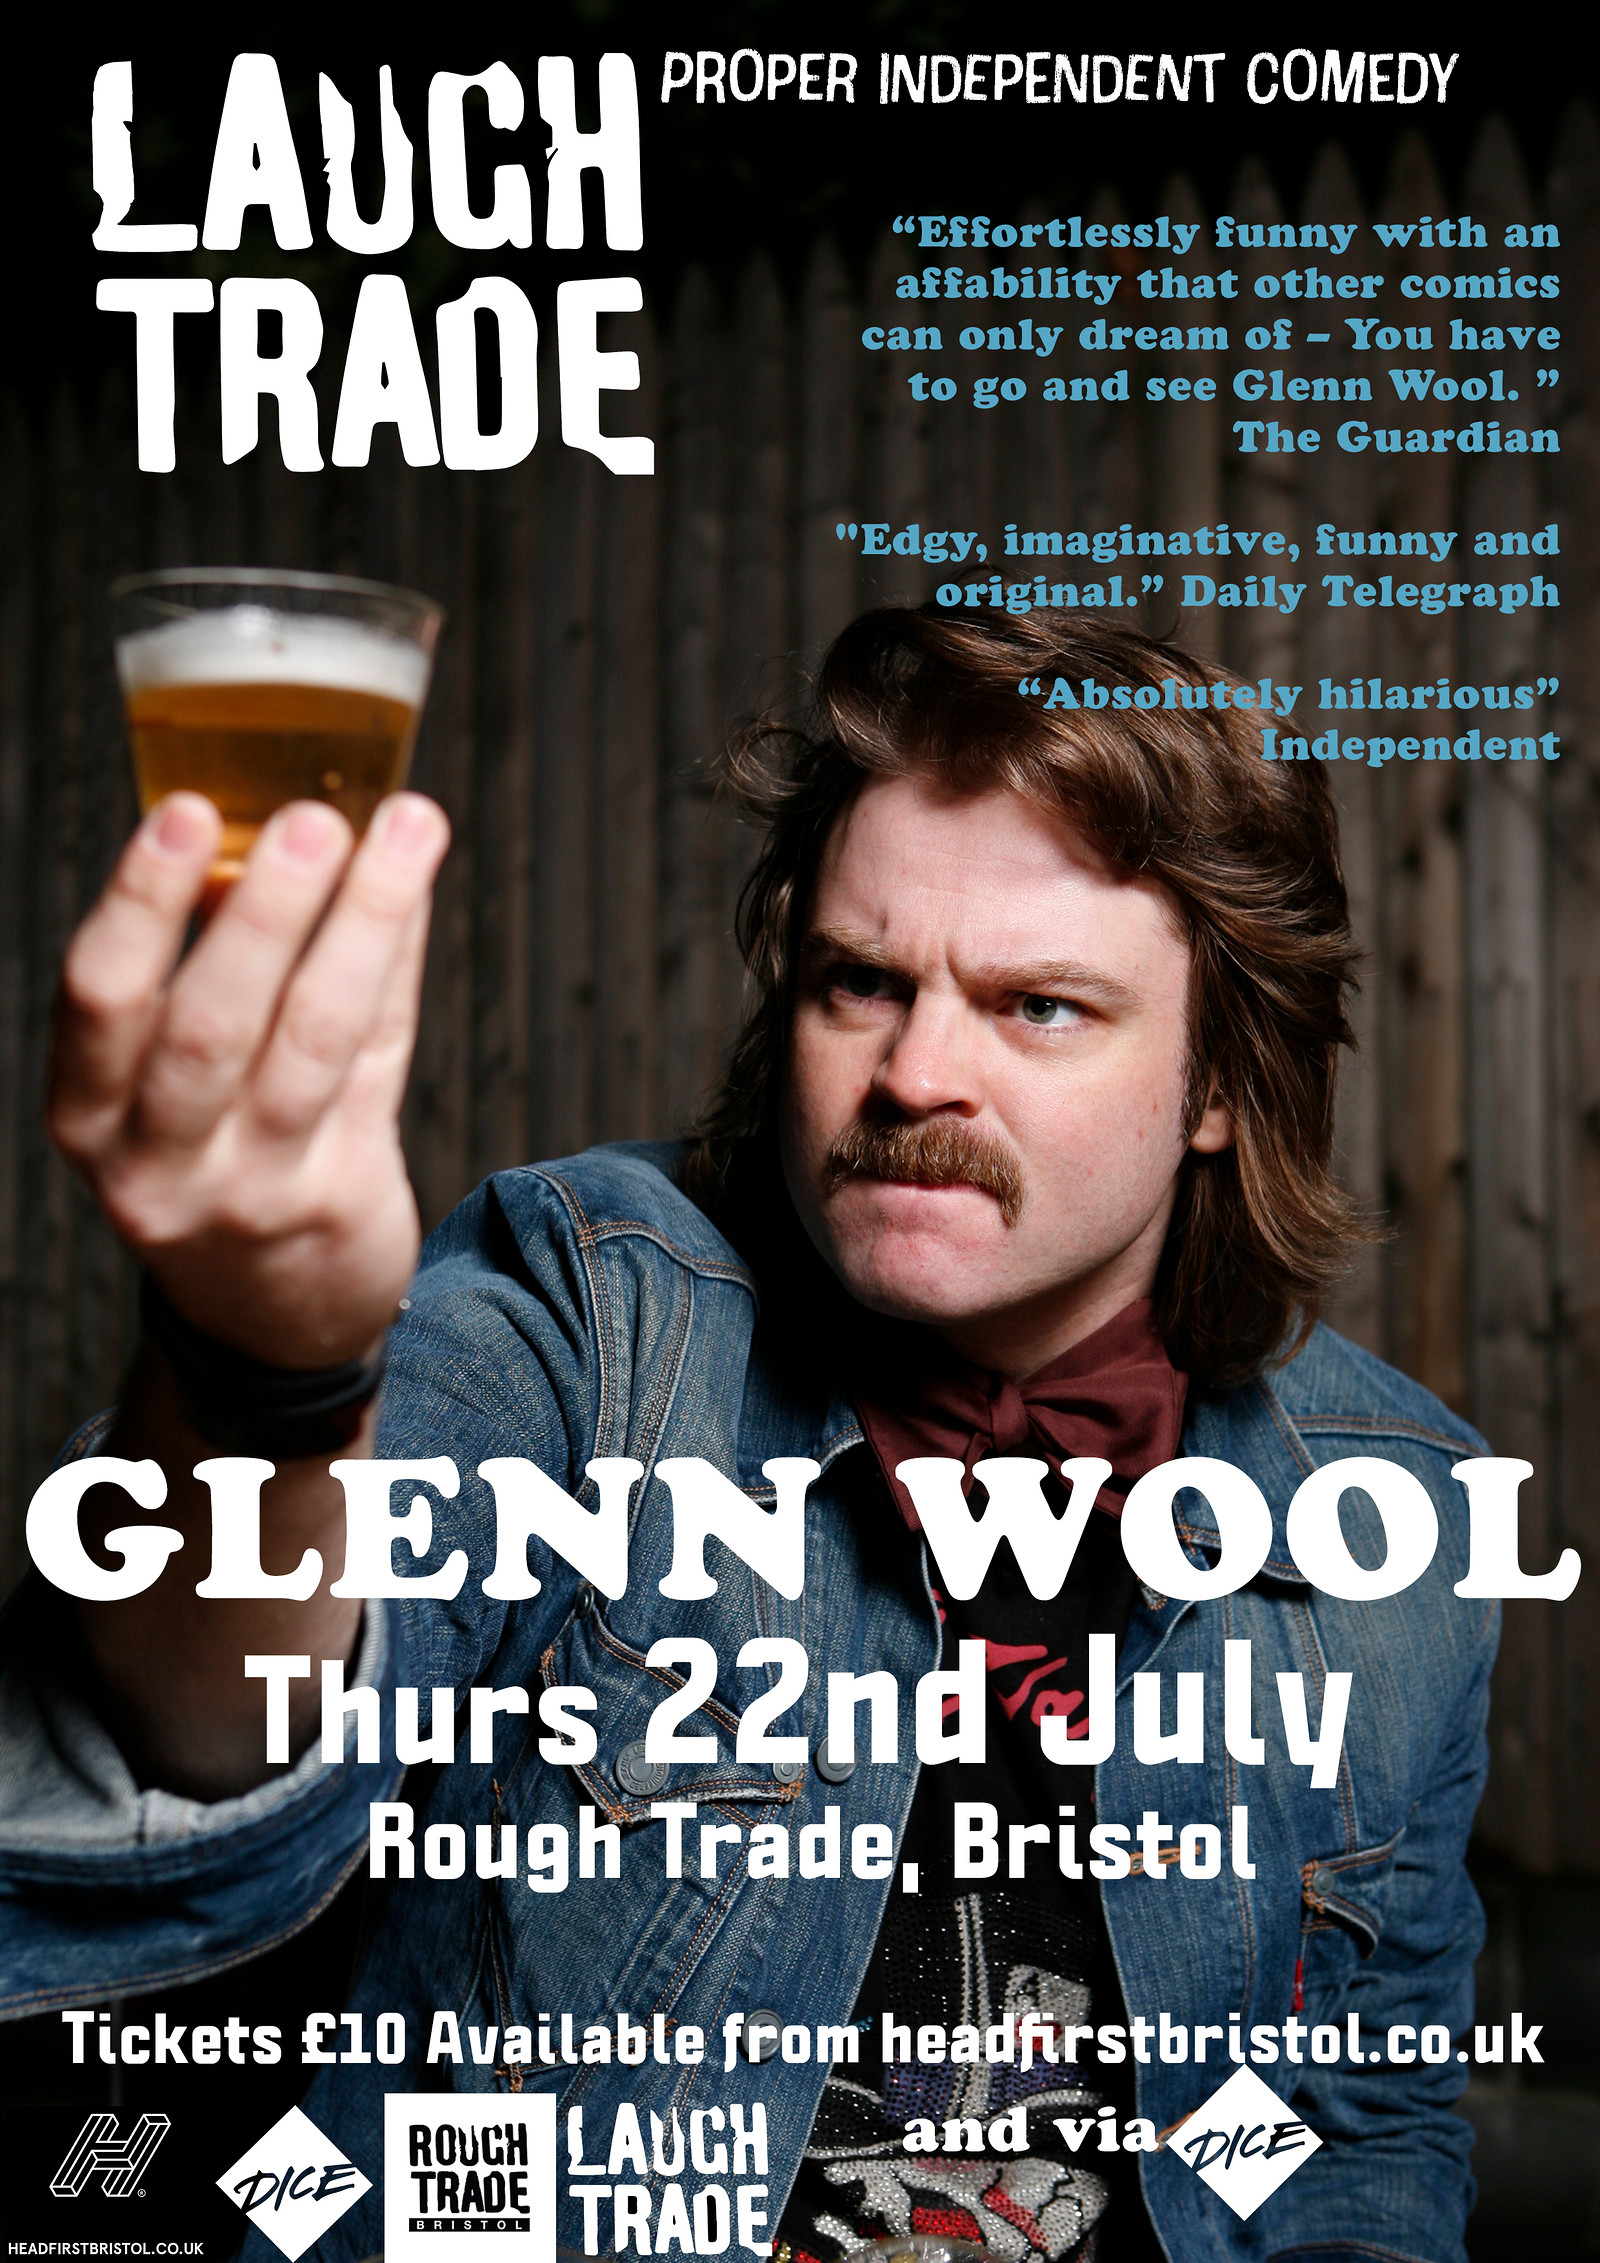 LaughTrade#1: GLENN WOOL at Rough Trade Bristol